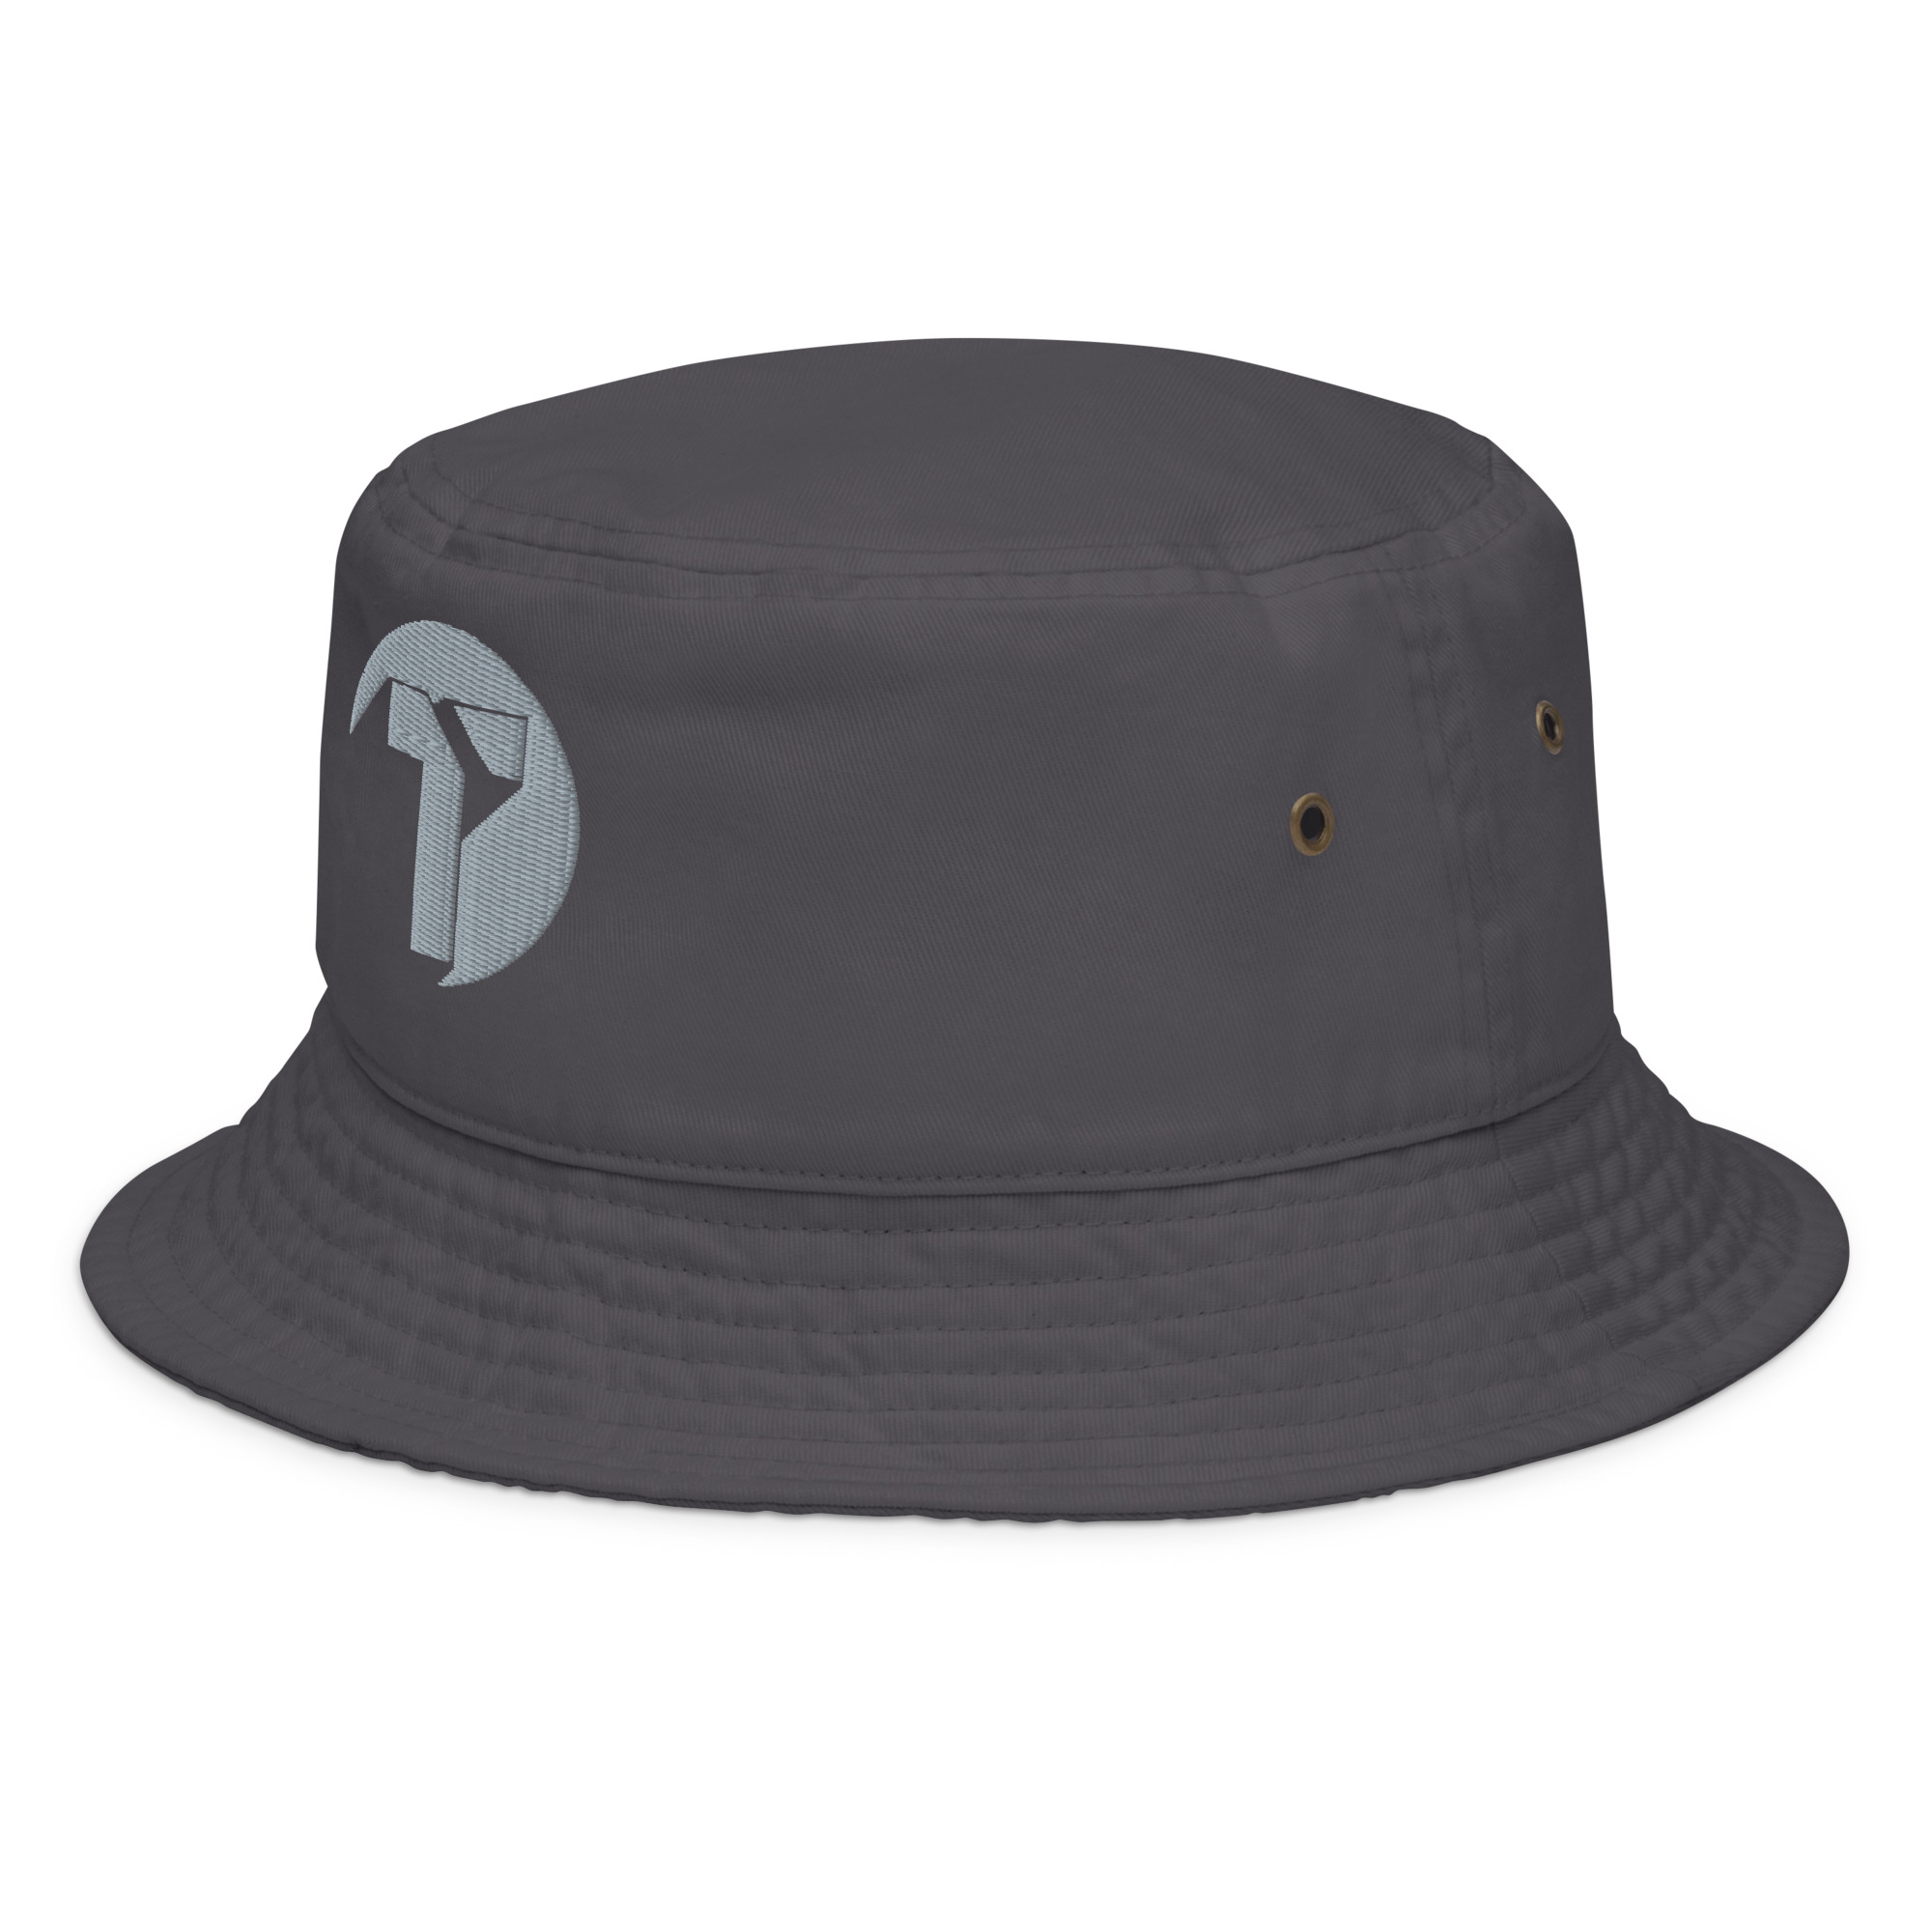 fashion-bucket-hat-charcoal-left-front-64b707dbdf456.jpg